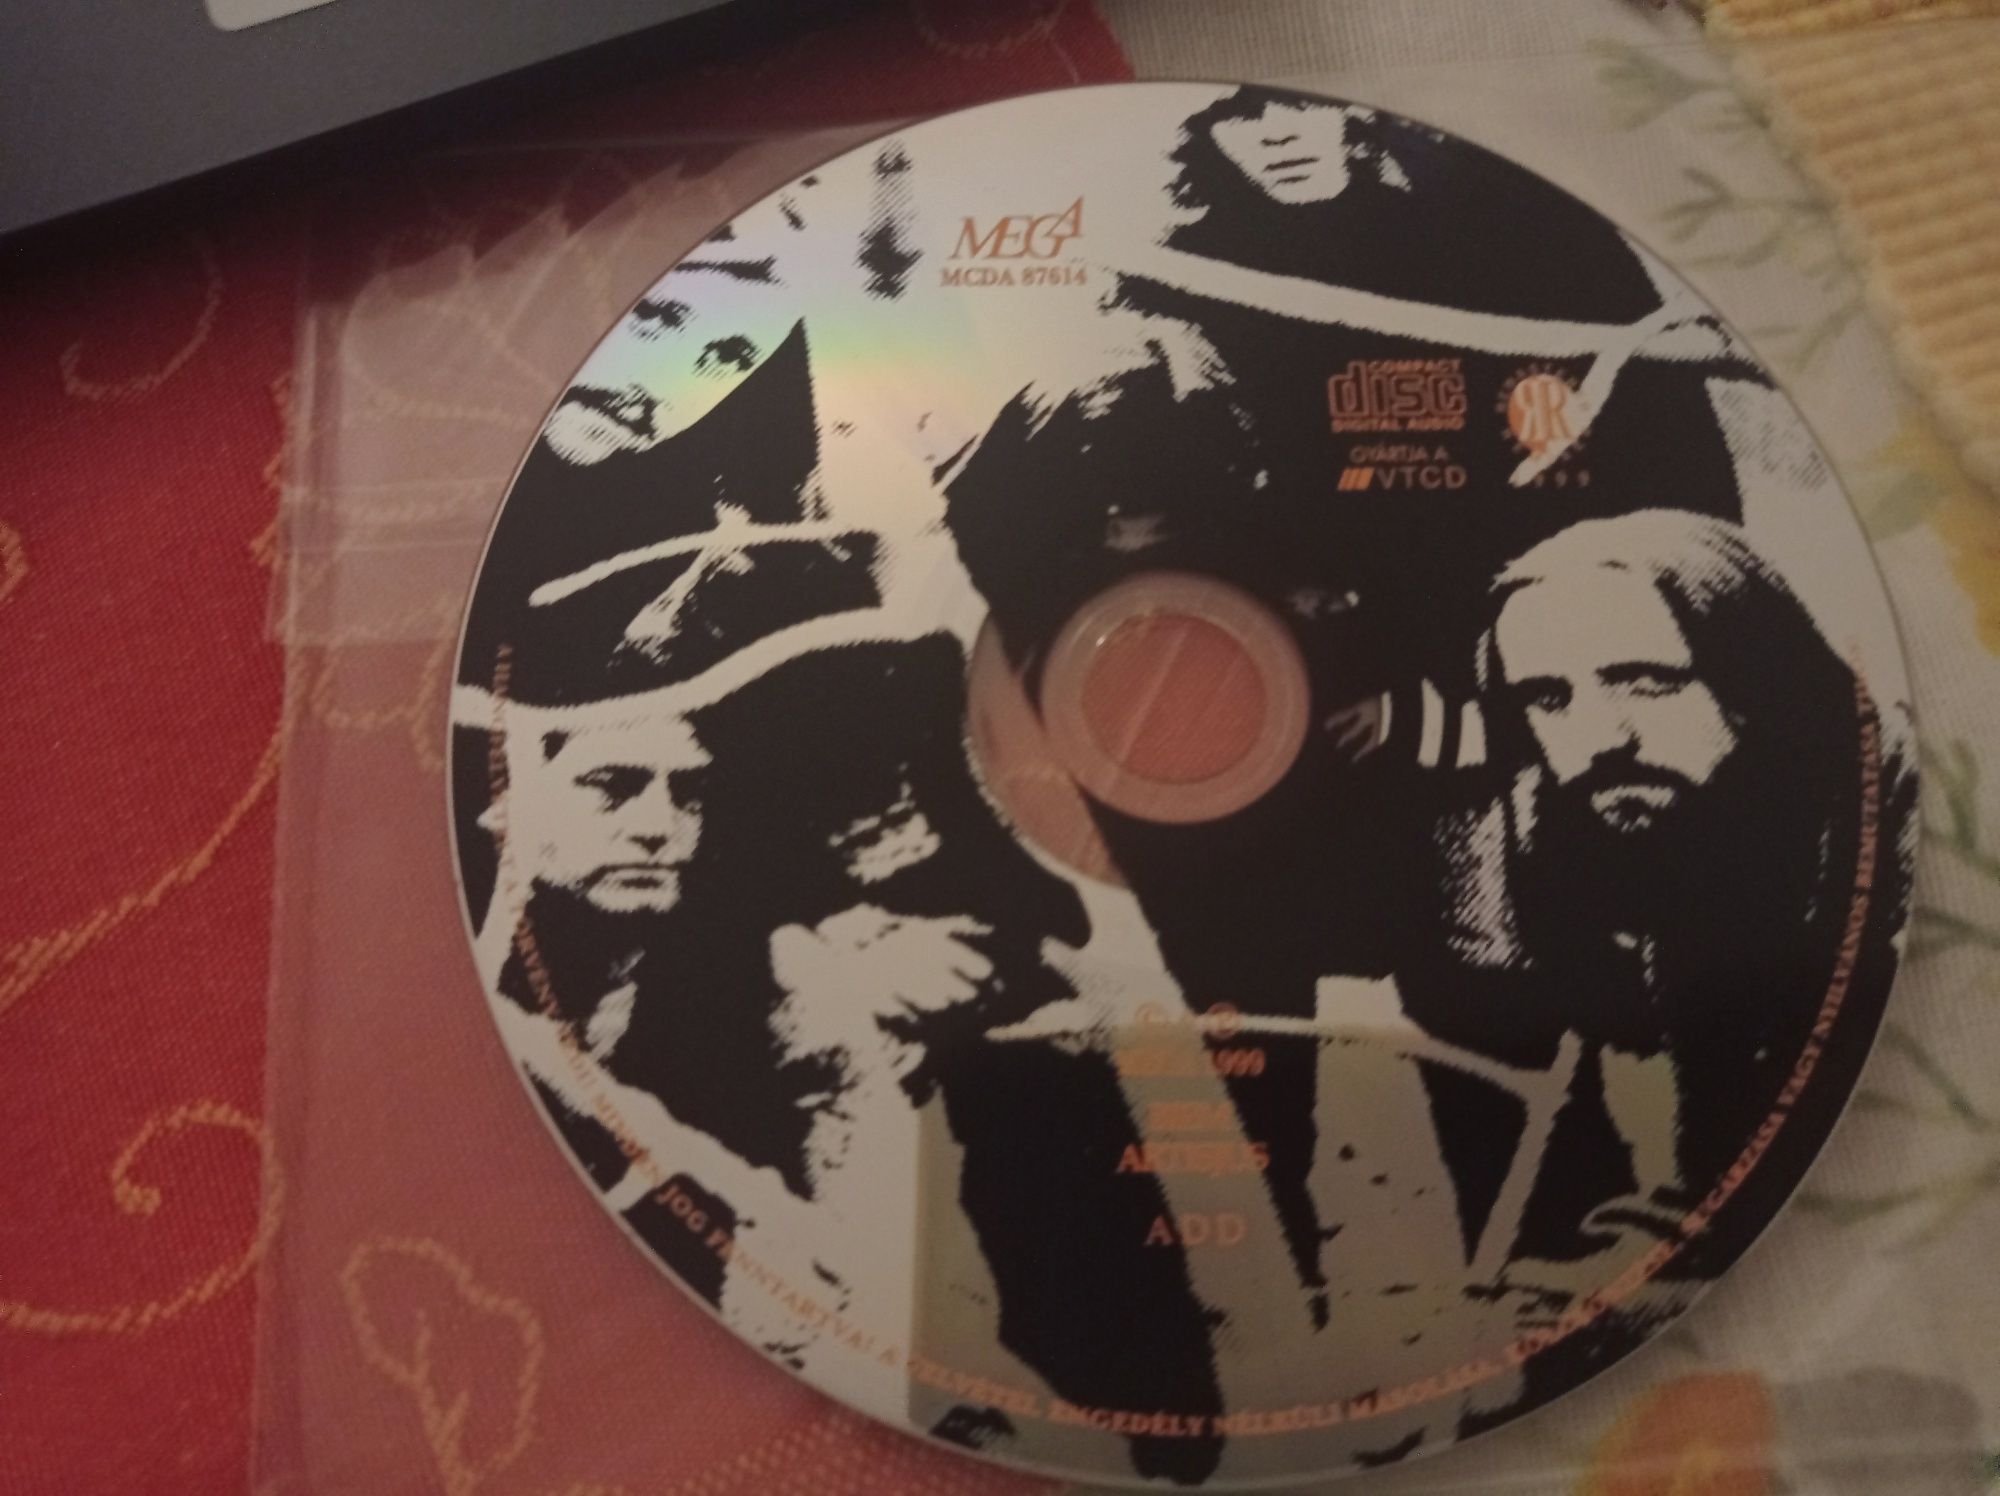 Omega - 5 Szvit CD